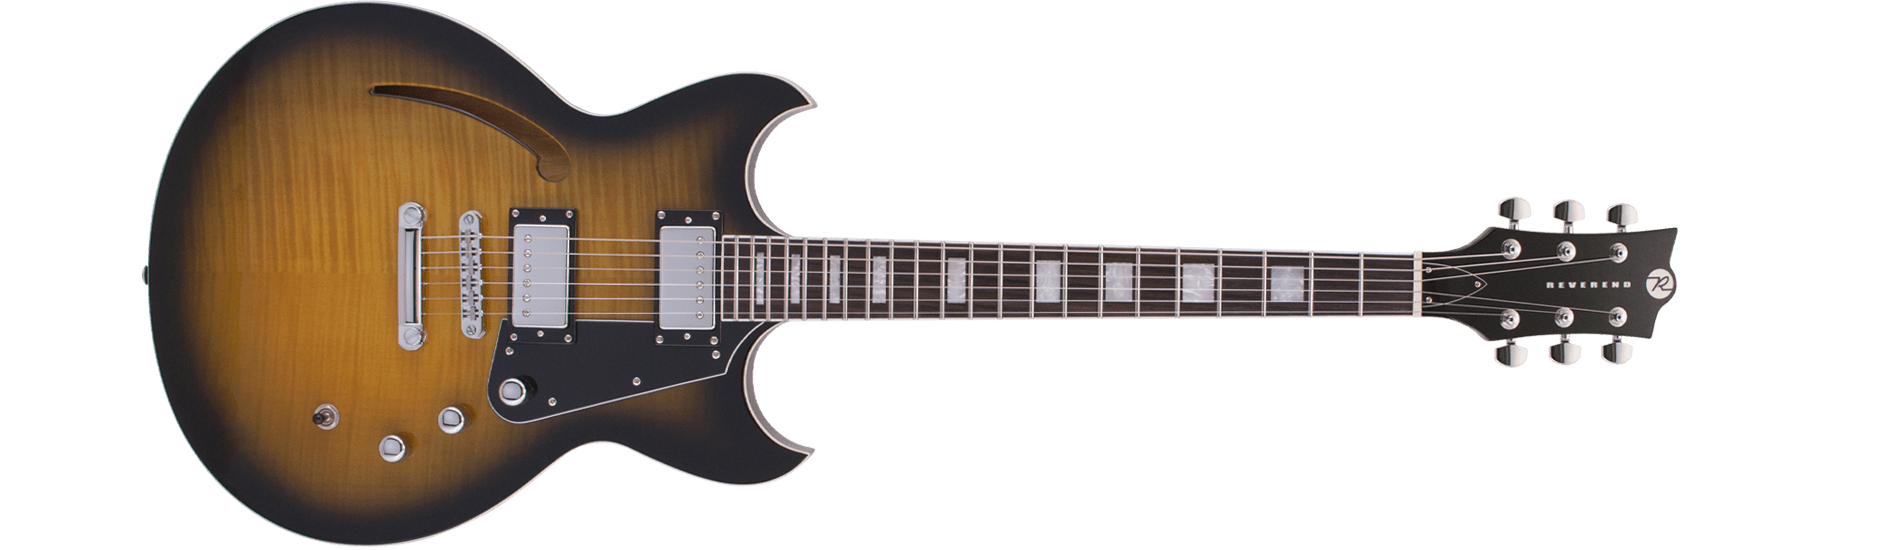 Gibson Metal Rock Guitar Download Free PNG